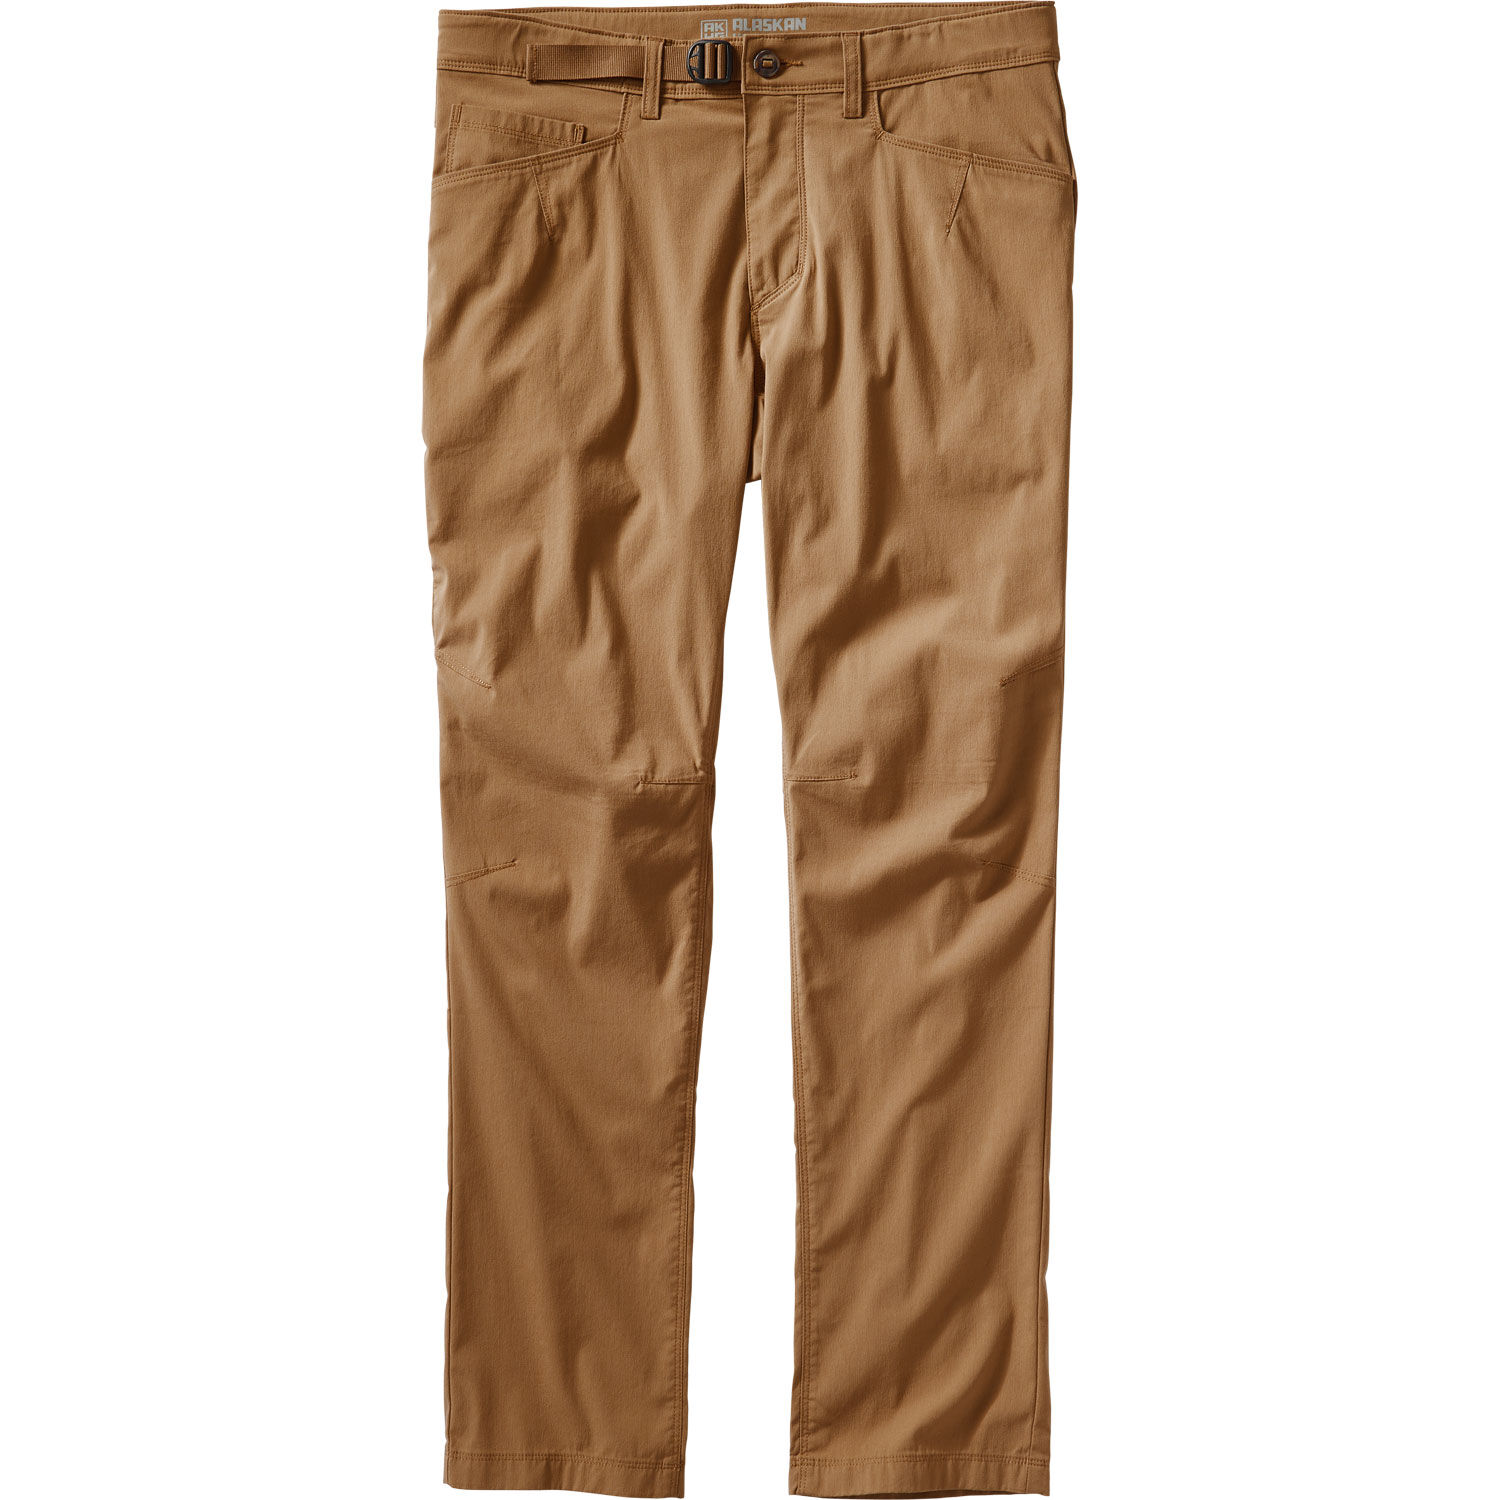 Men Fashion Street Harem Pants Hip Hop Elastic Cargo Pants Joggers Trousers  New | eBay